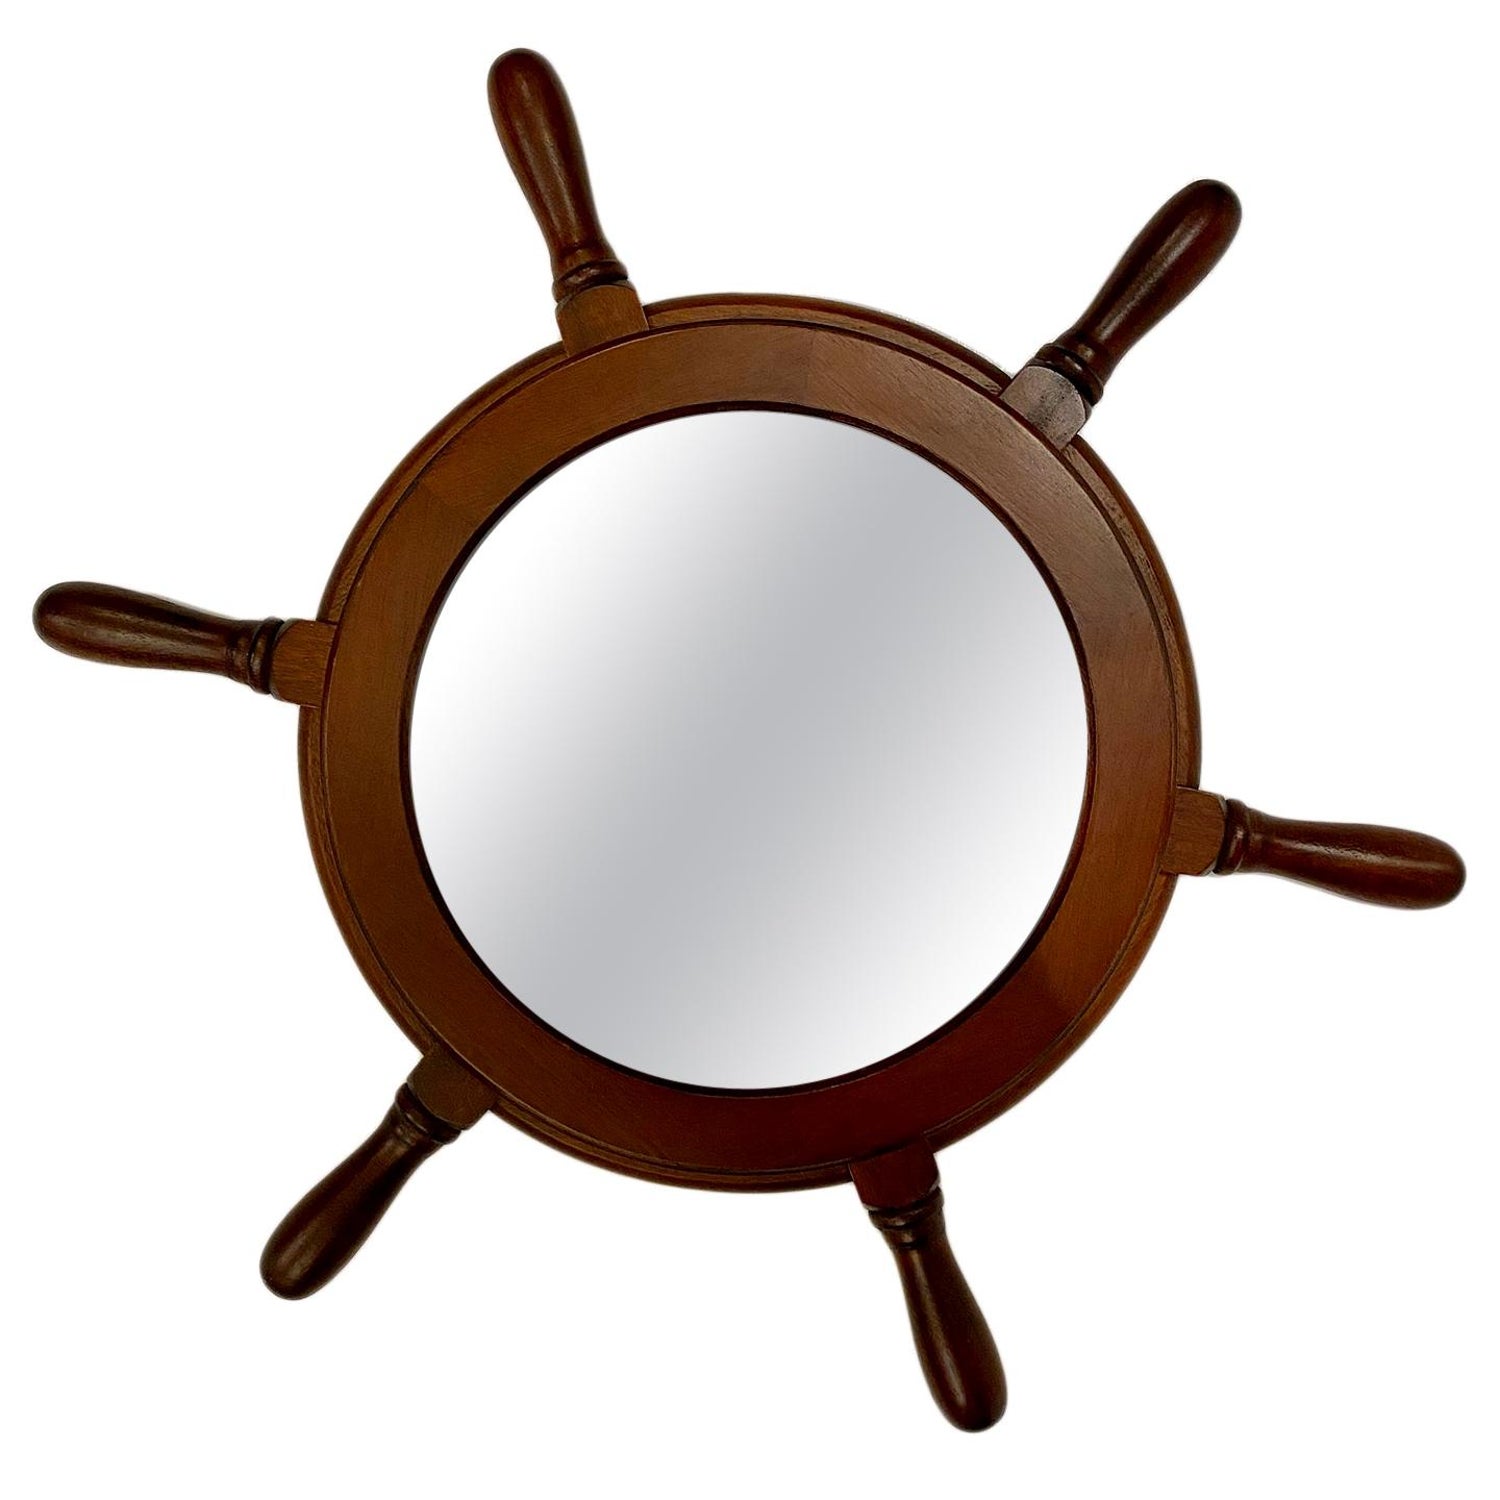 Ship Steering Wheel Mirror, Ship Wheel Bathroom Mirror